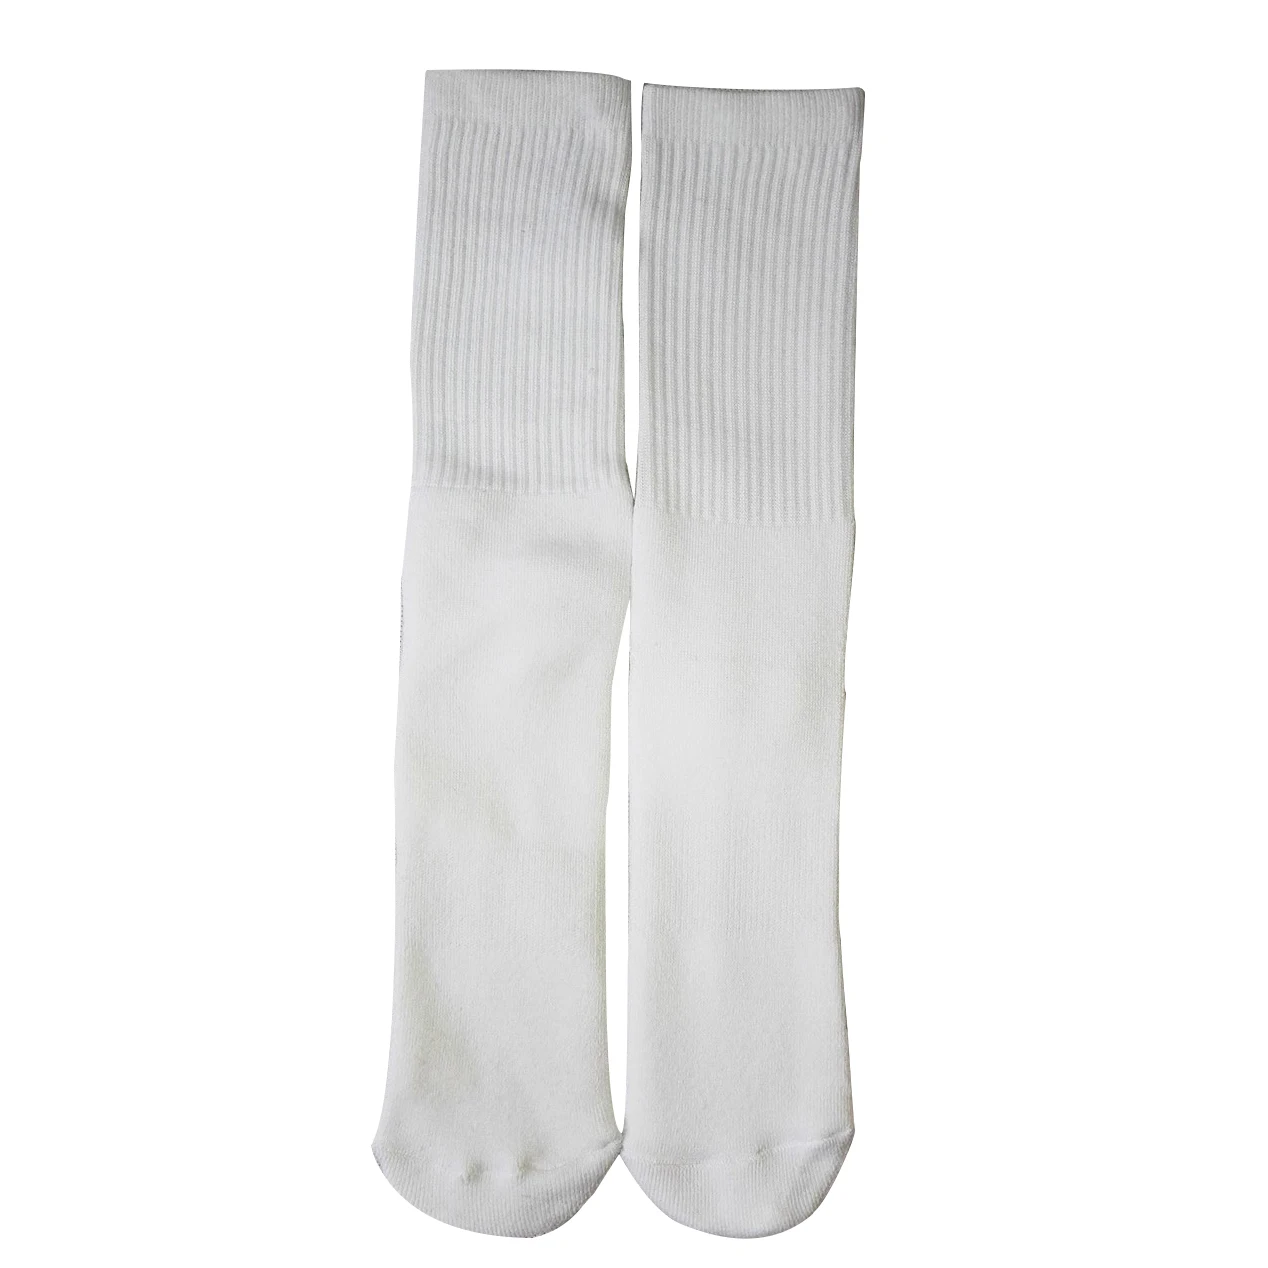 white blank sublimation socks 100 polyester socks with rib on leg